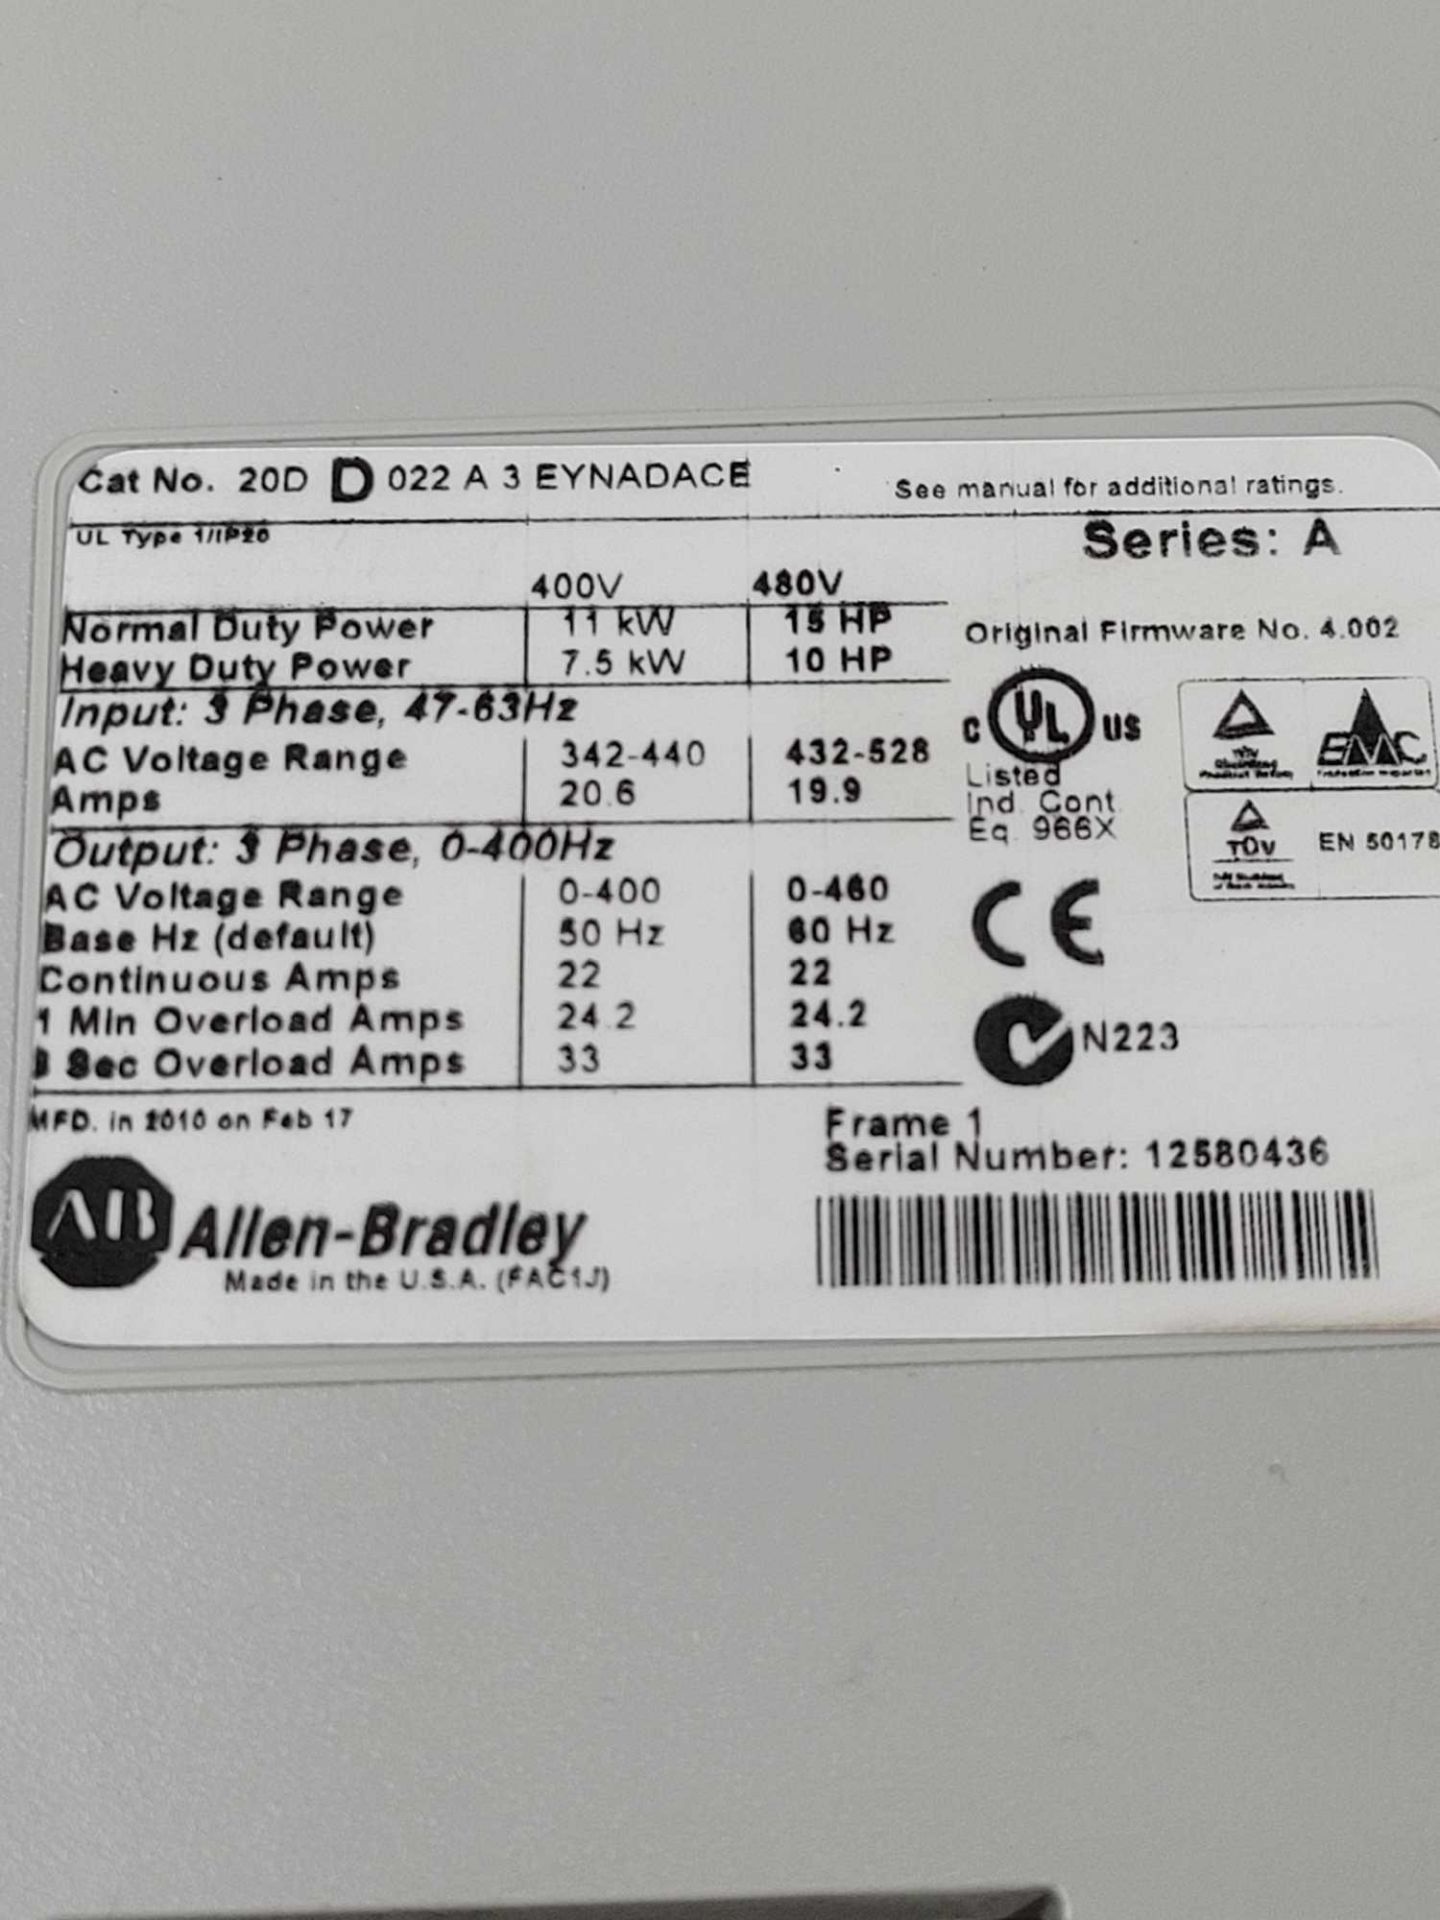 ALLEN BRADLEY 20DD022A3EYNADACE / Series A Powerflex 700S AC Drive  /  Lot Weight: 16.6 lbs - Image 6 of 7